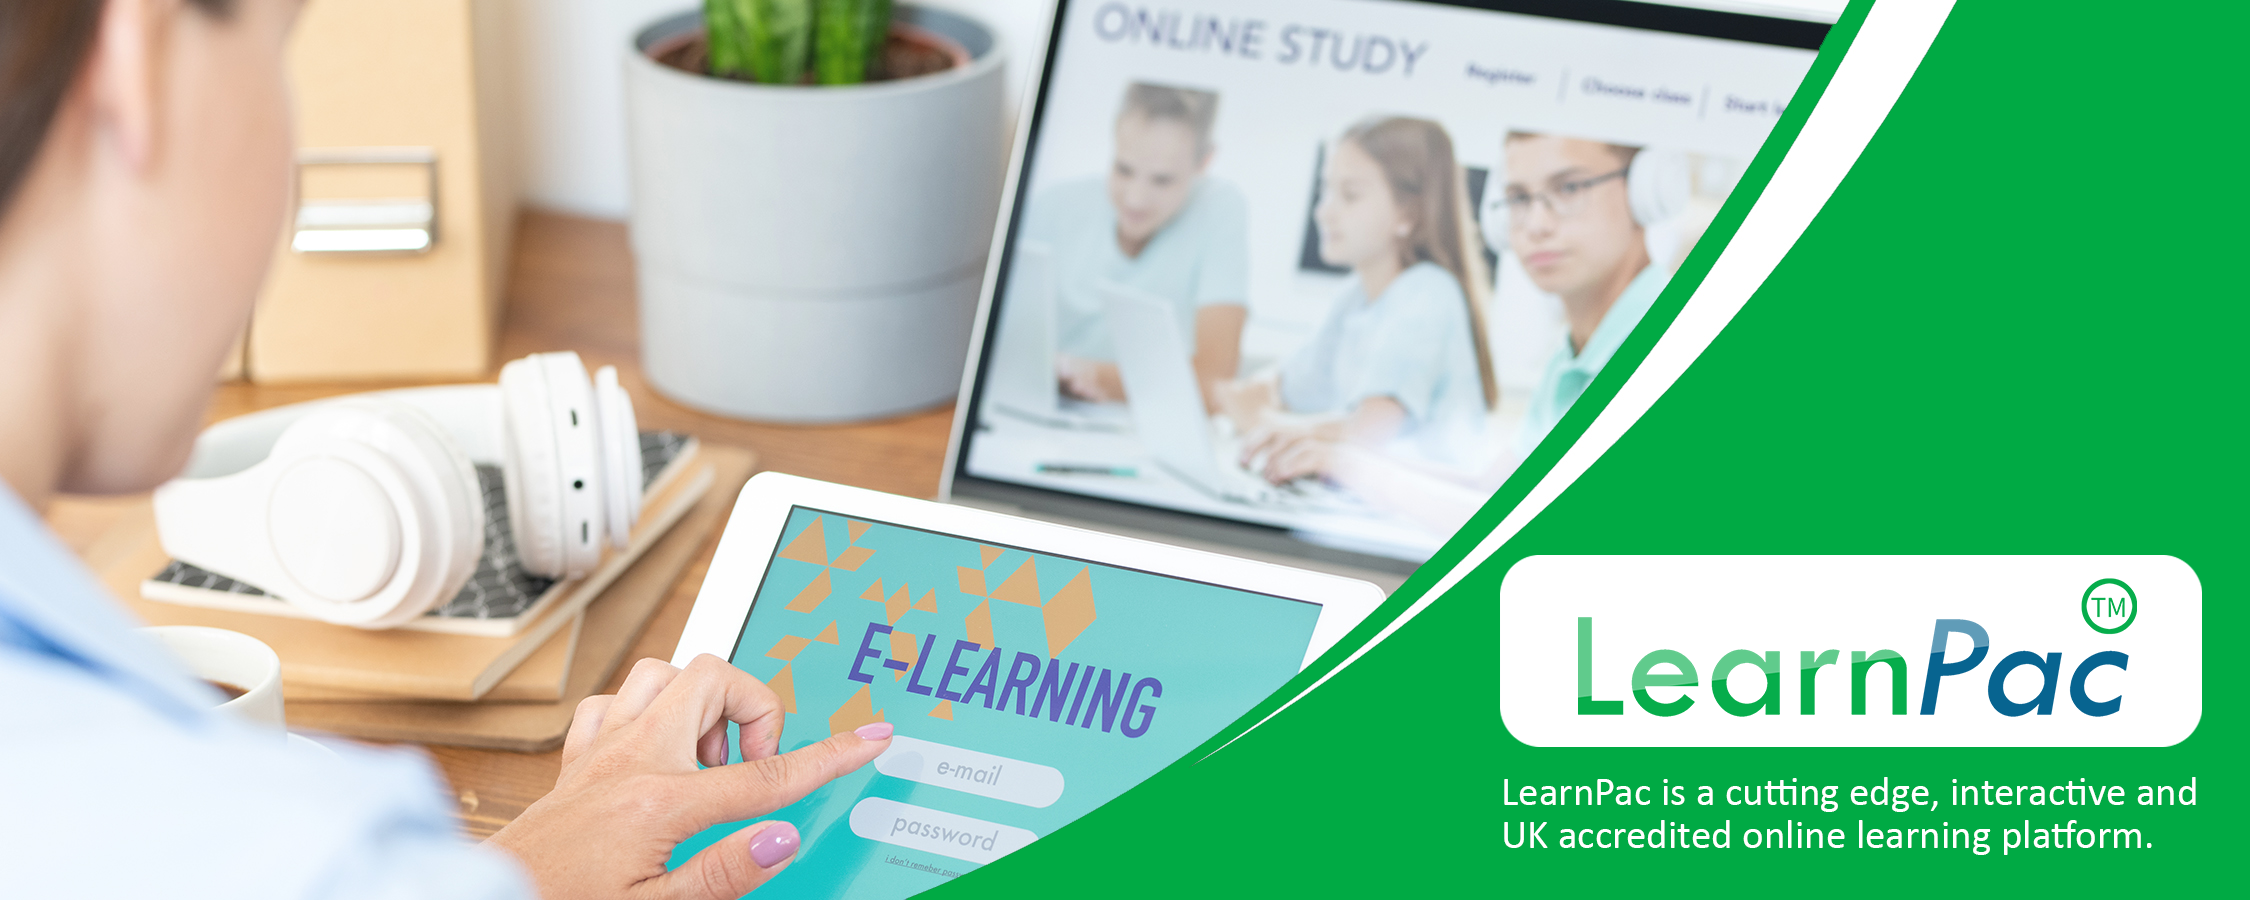 Motor Neurone Disease Awareness - Online Learning Courses - E-Learning Courses - LearnPac Systems UK -